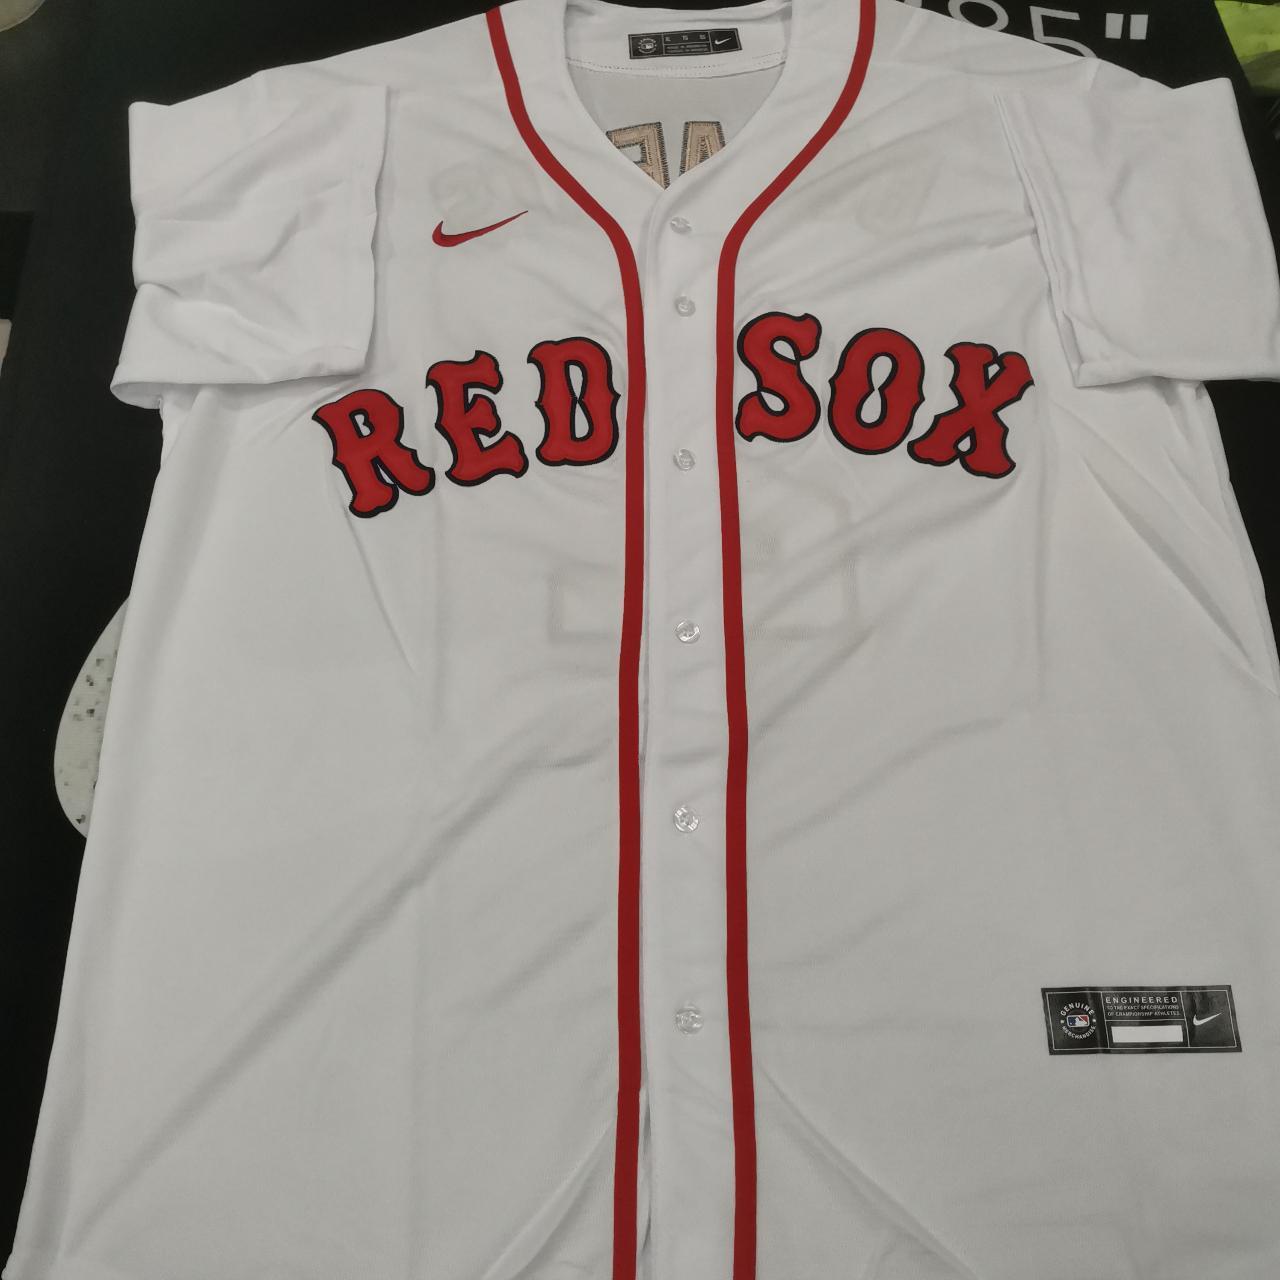 Nike / Men's Boston Red Sox Xander Bogaerts #2 Gray T-Shirt